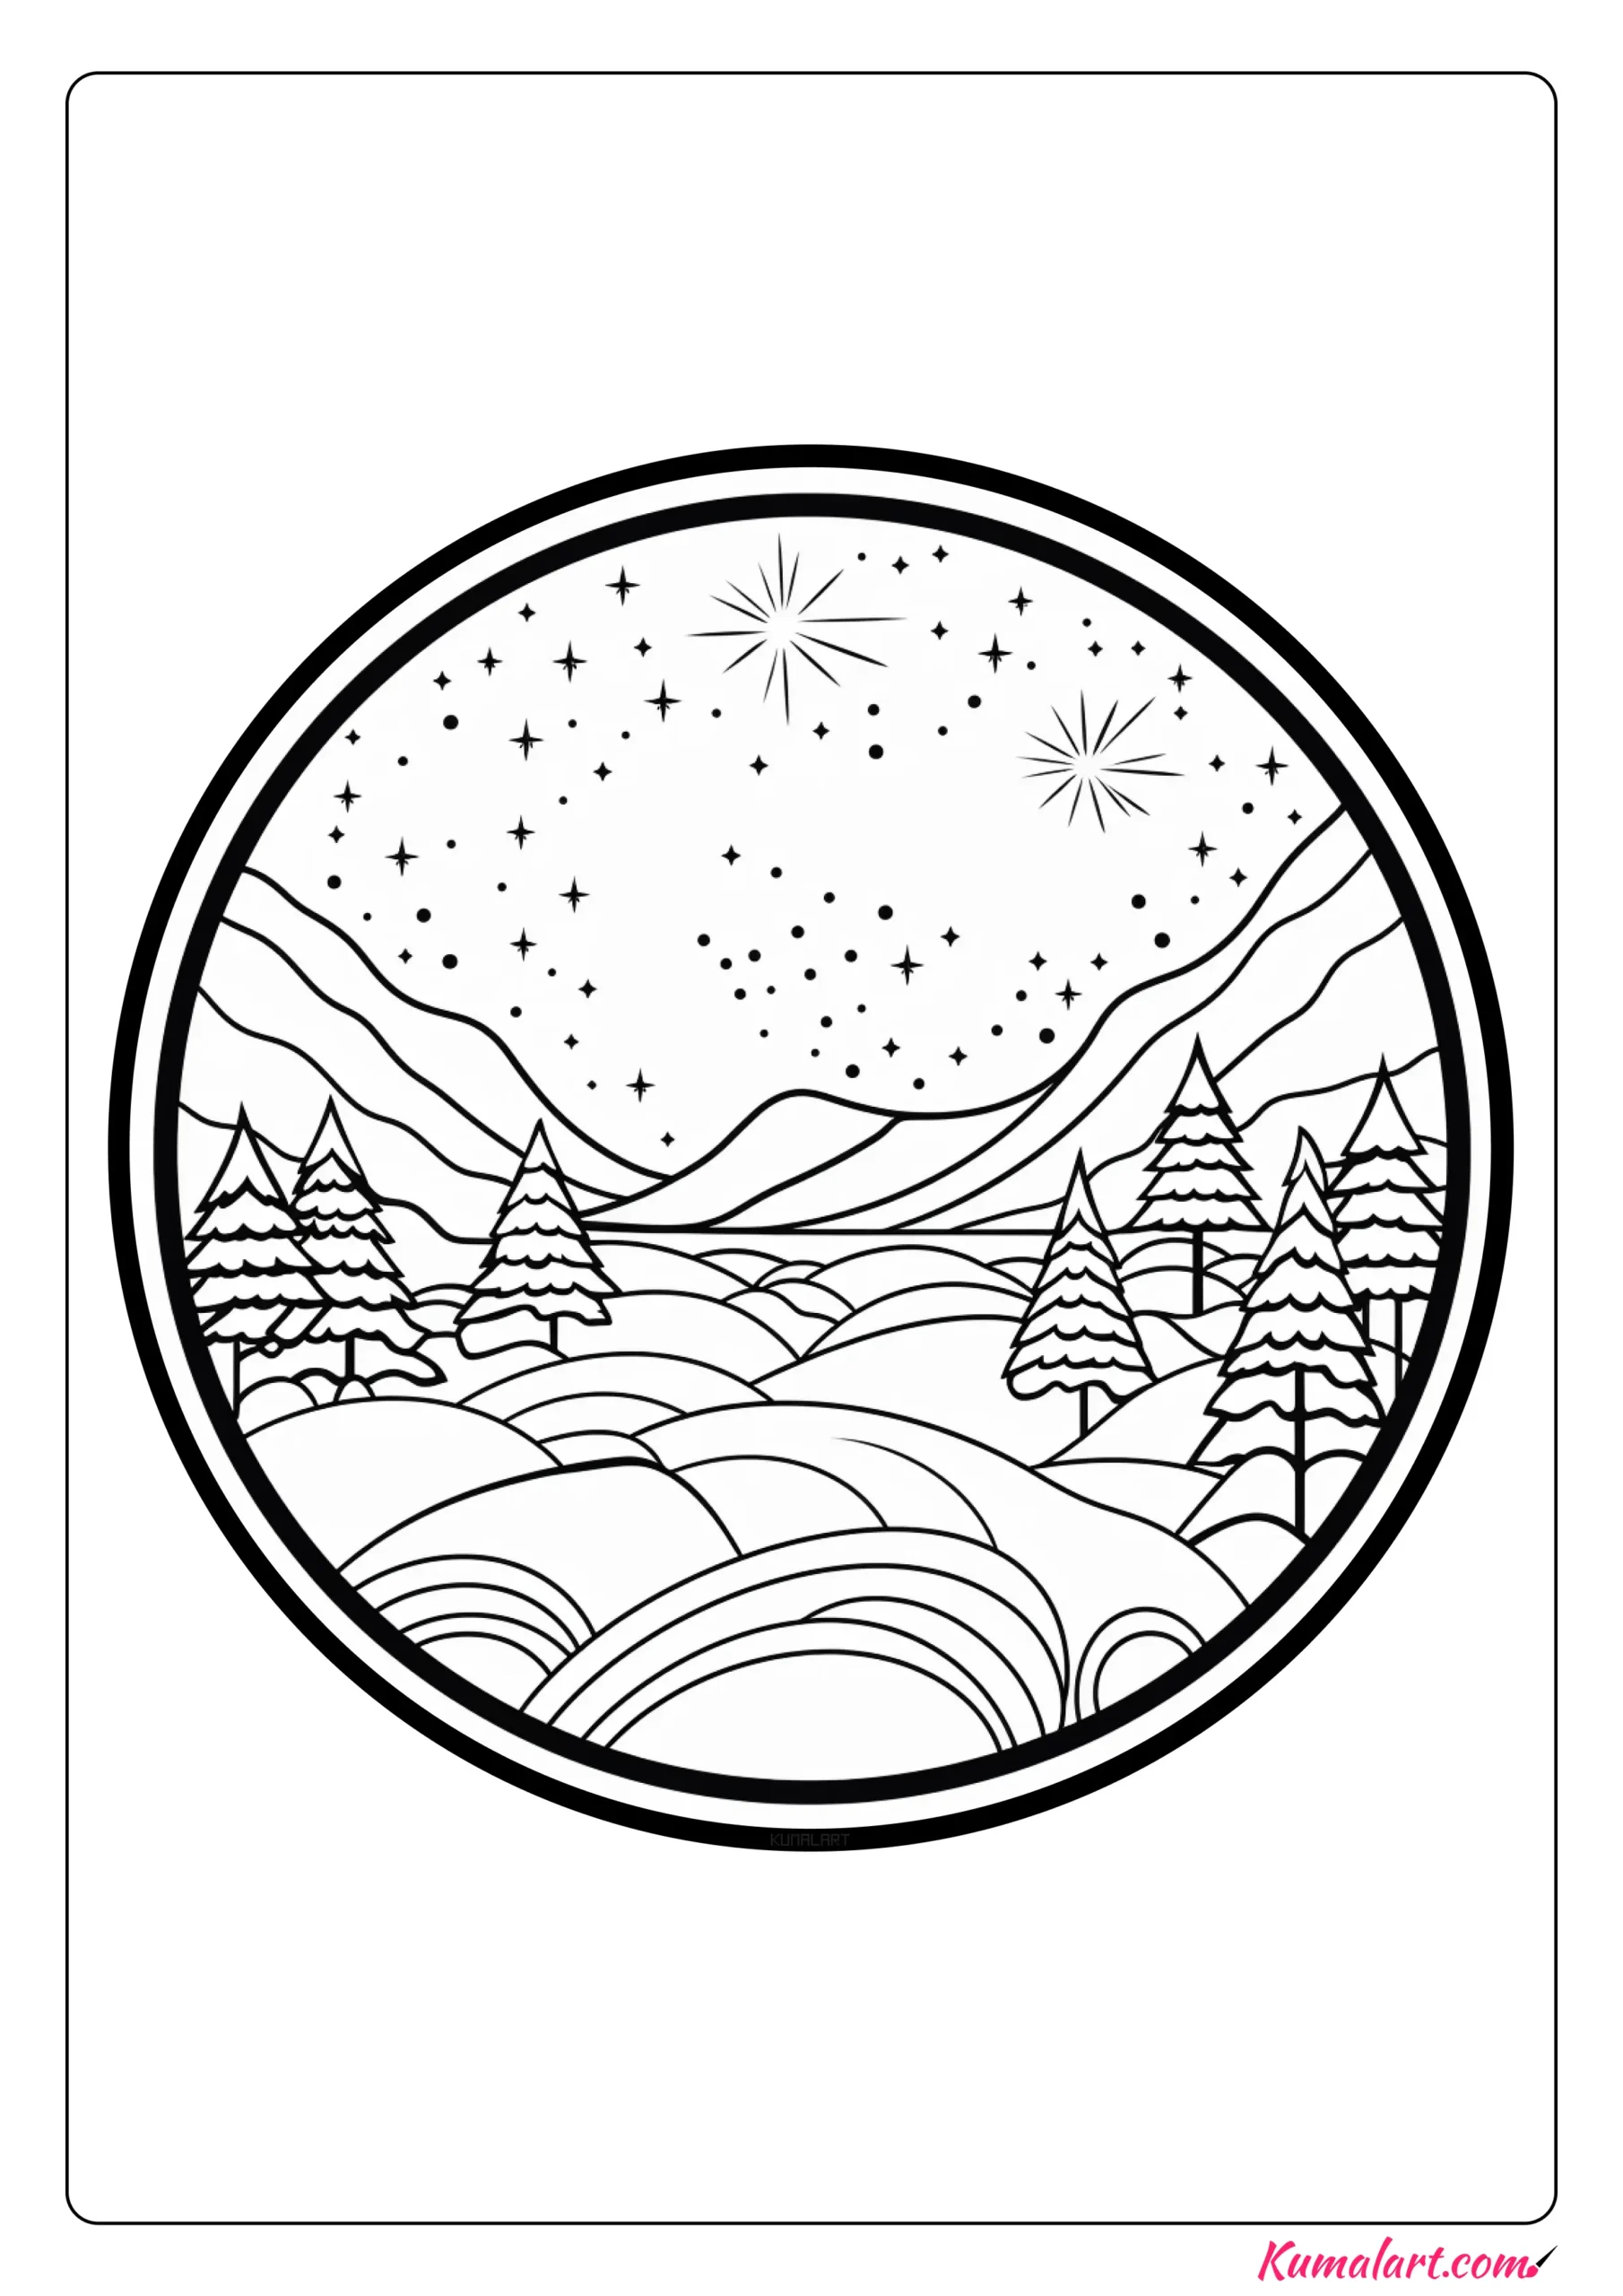 Snowy Winter Mandala Coloring Page